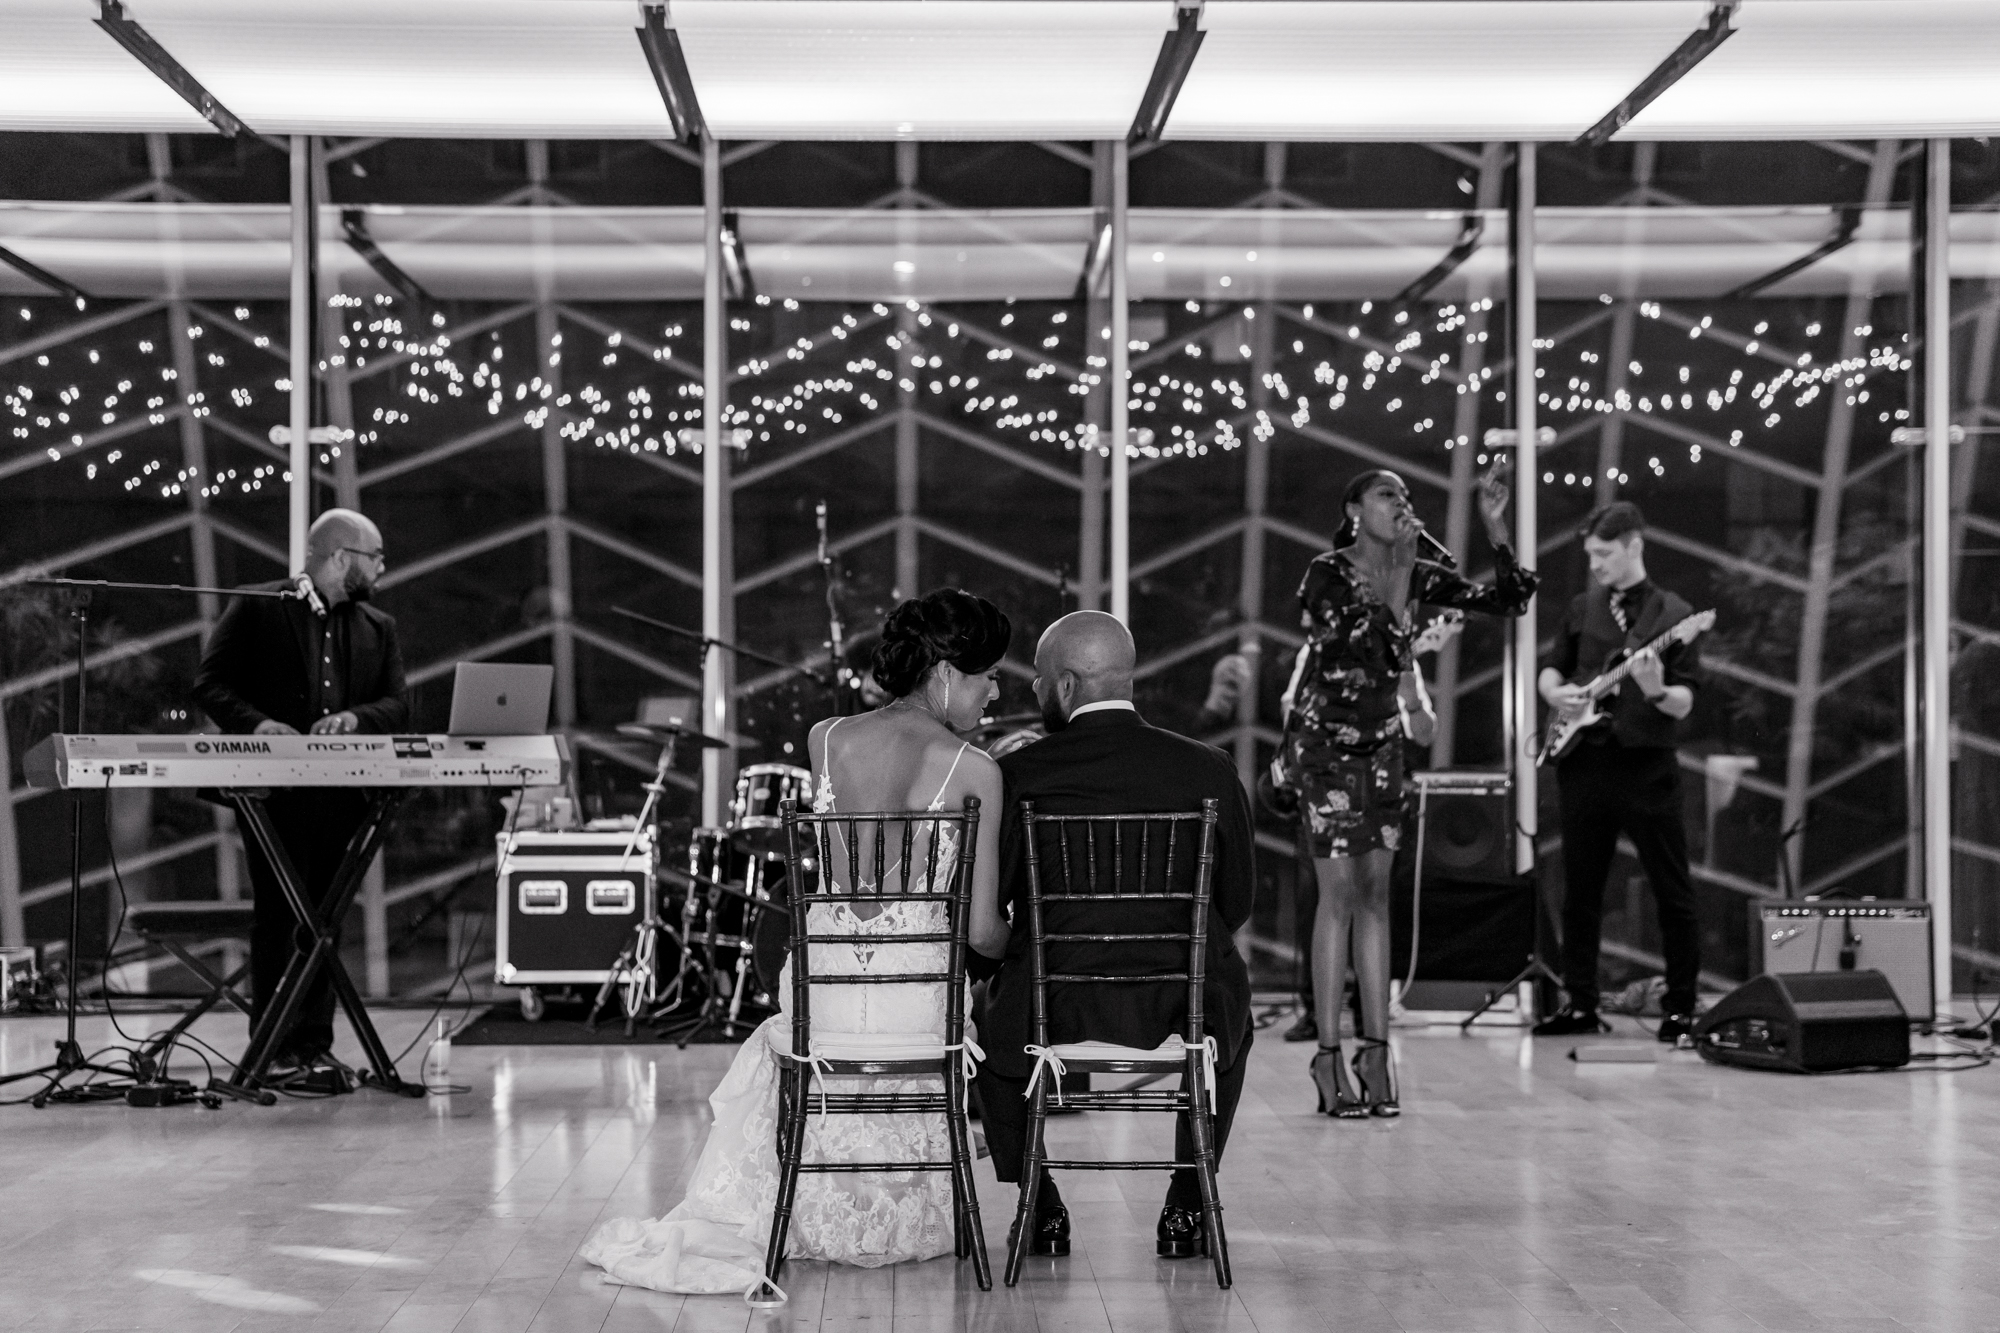 scenes from a kimmel center wedding reception